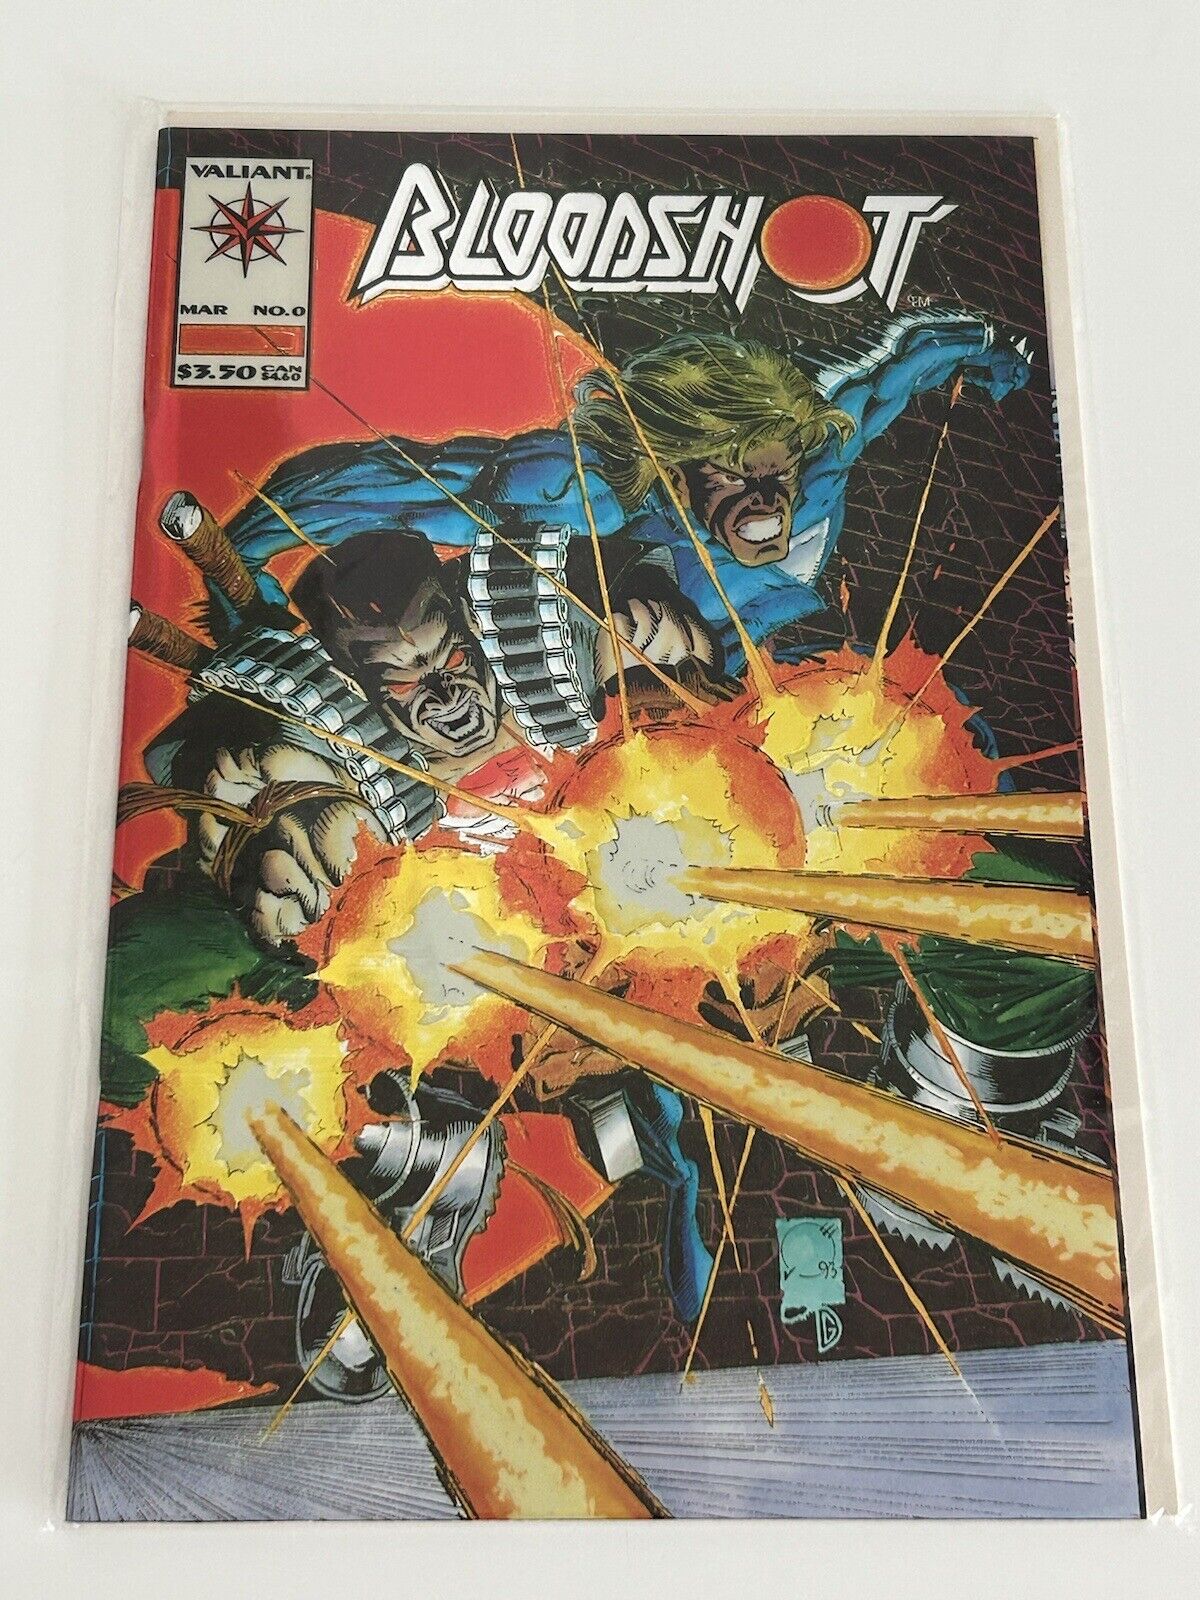 Valiant Comics BLOODSHOT #0 Modern Age March 1994 Comic Book